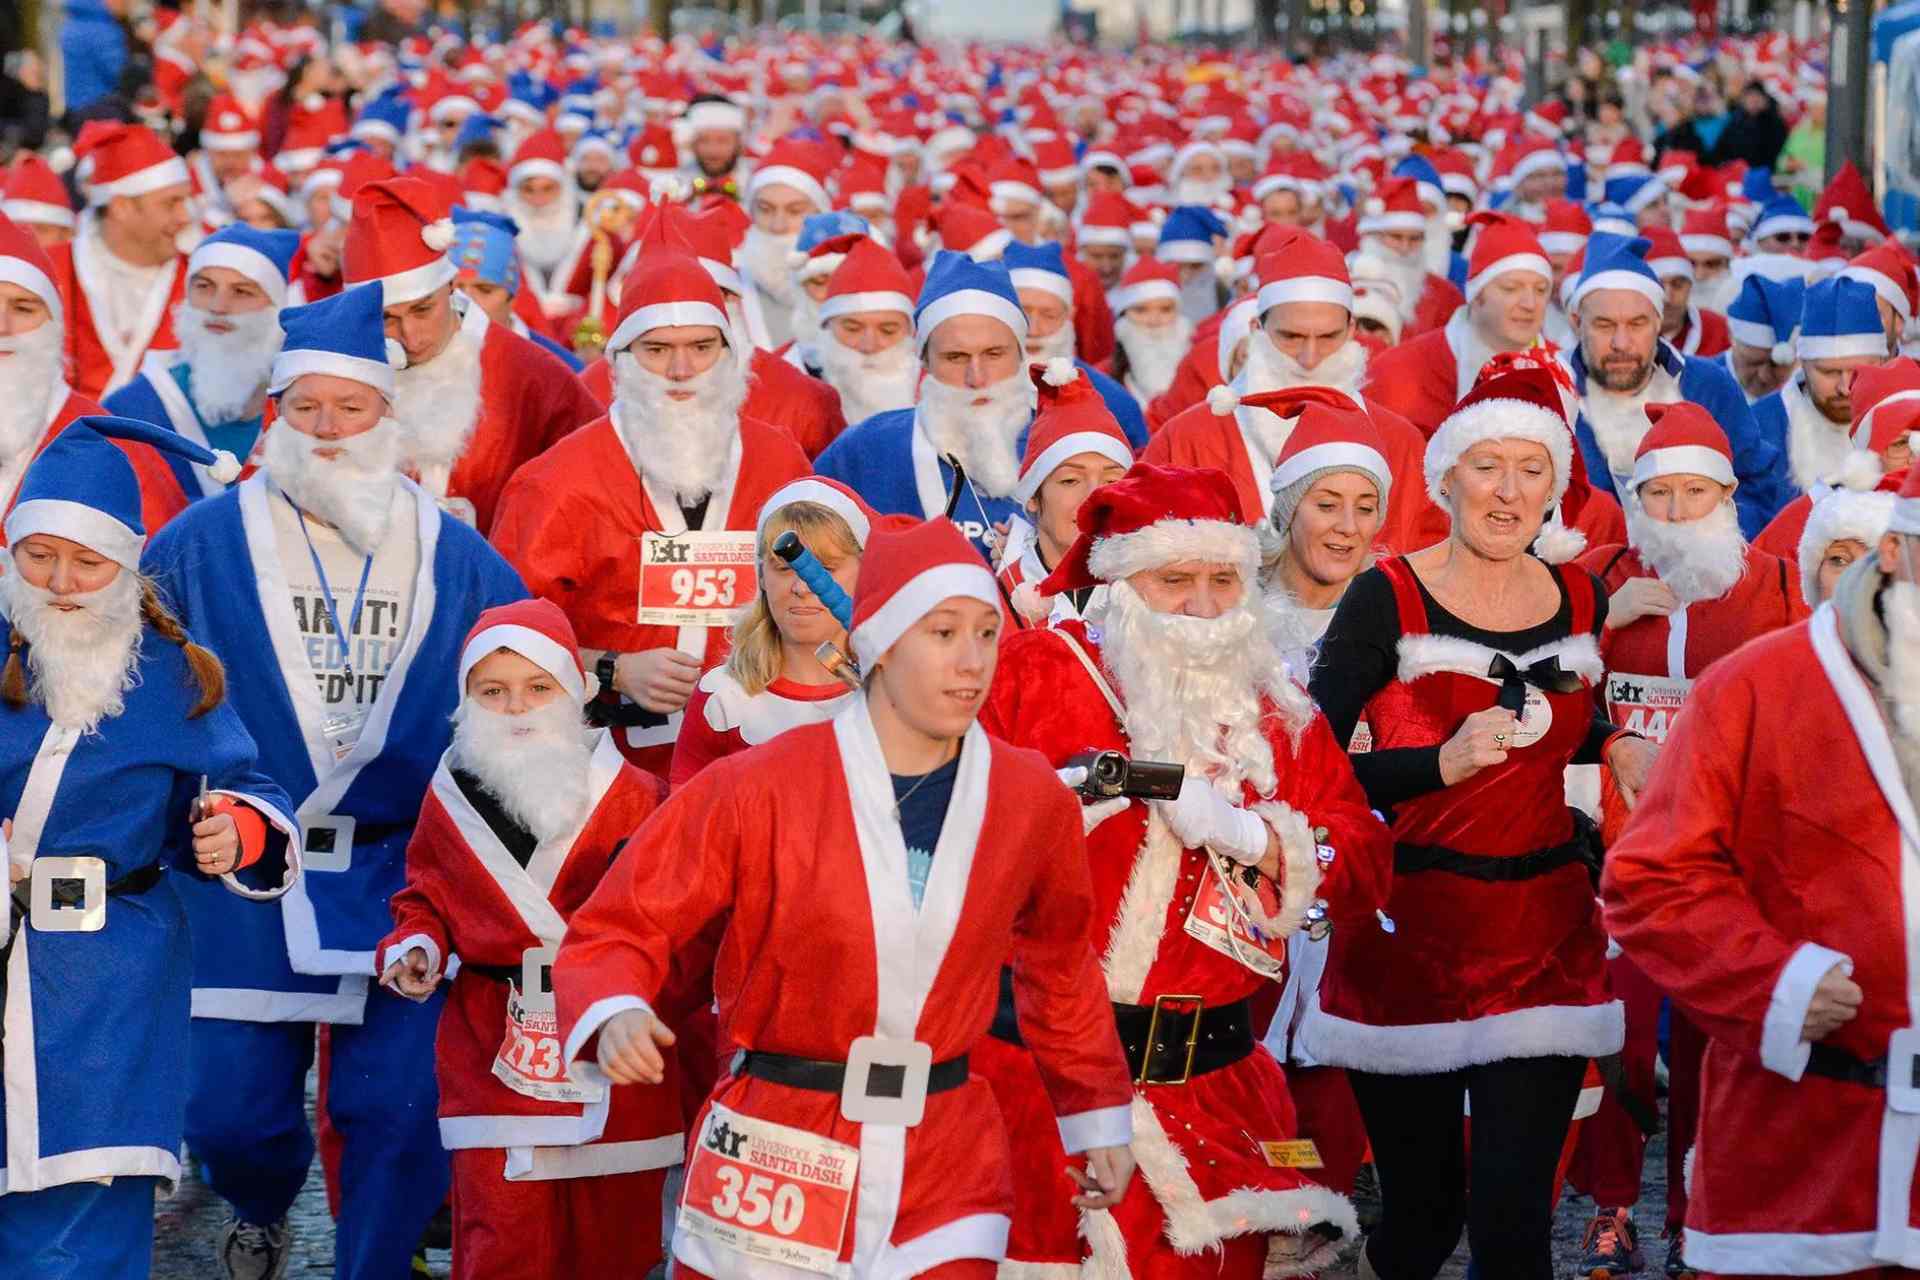 People running in The Santa Dash